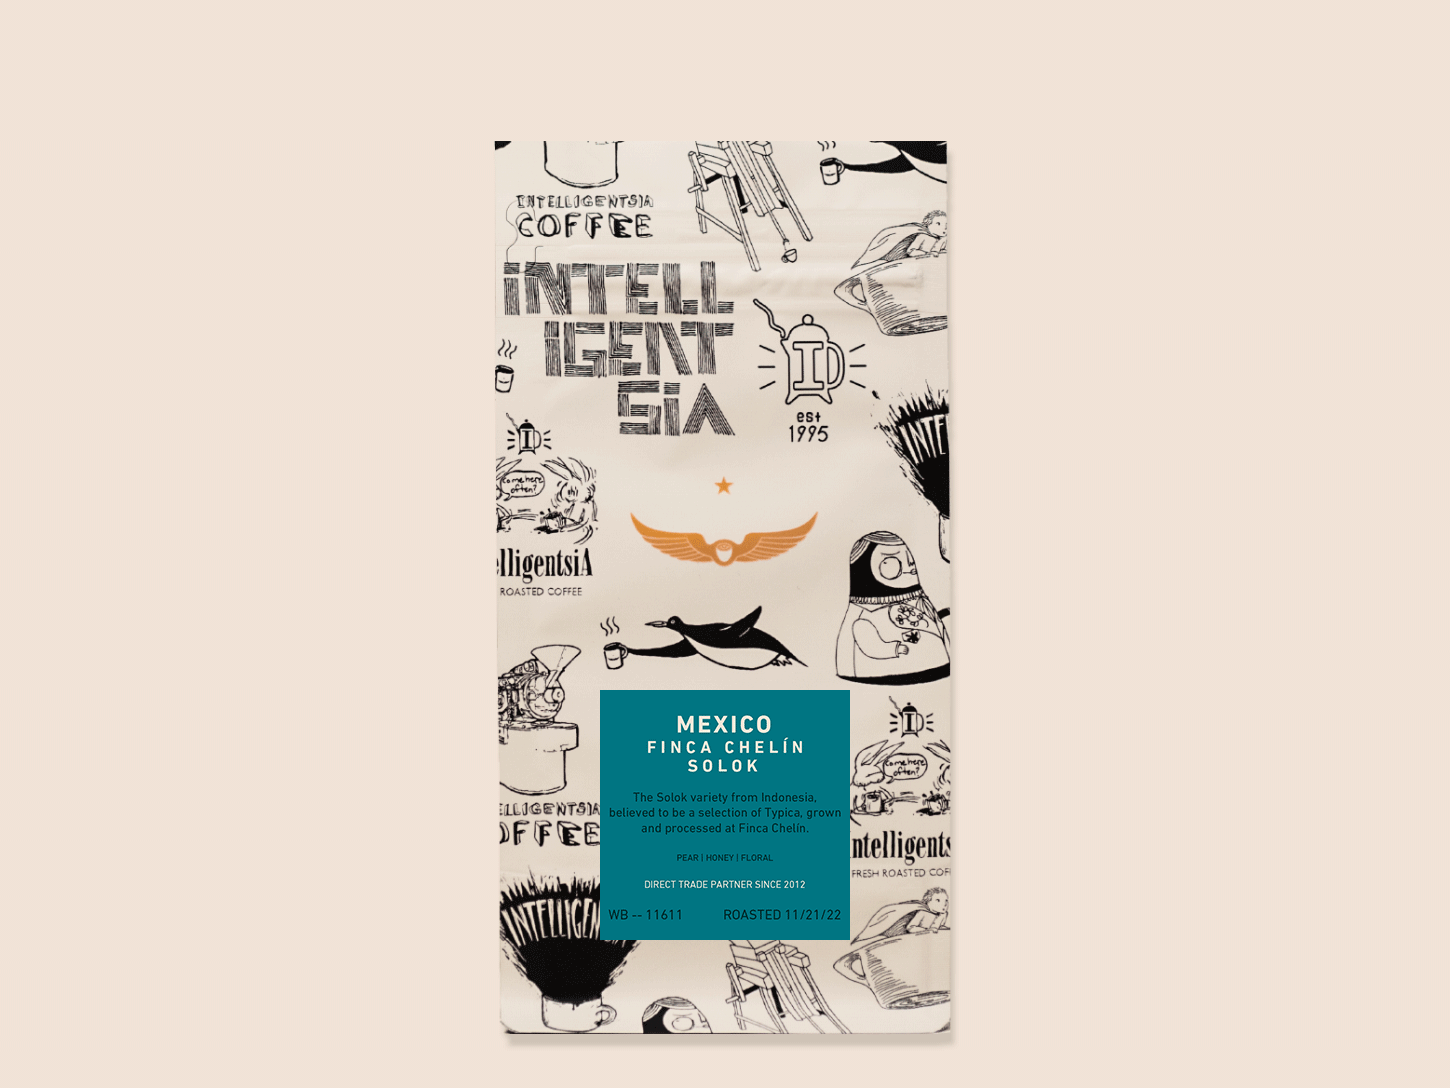 Mexico Finca Chelín Solok | Special Selection Coffee | Intelligentsia Coffee